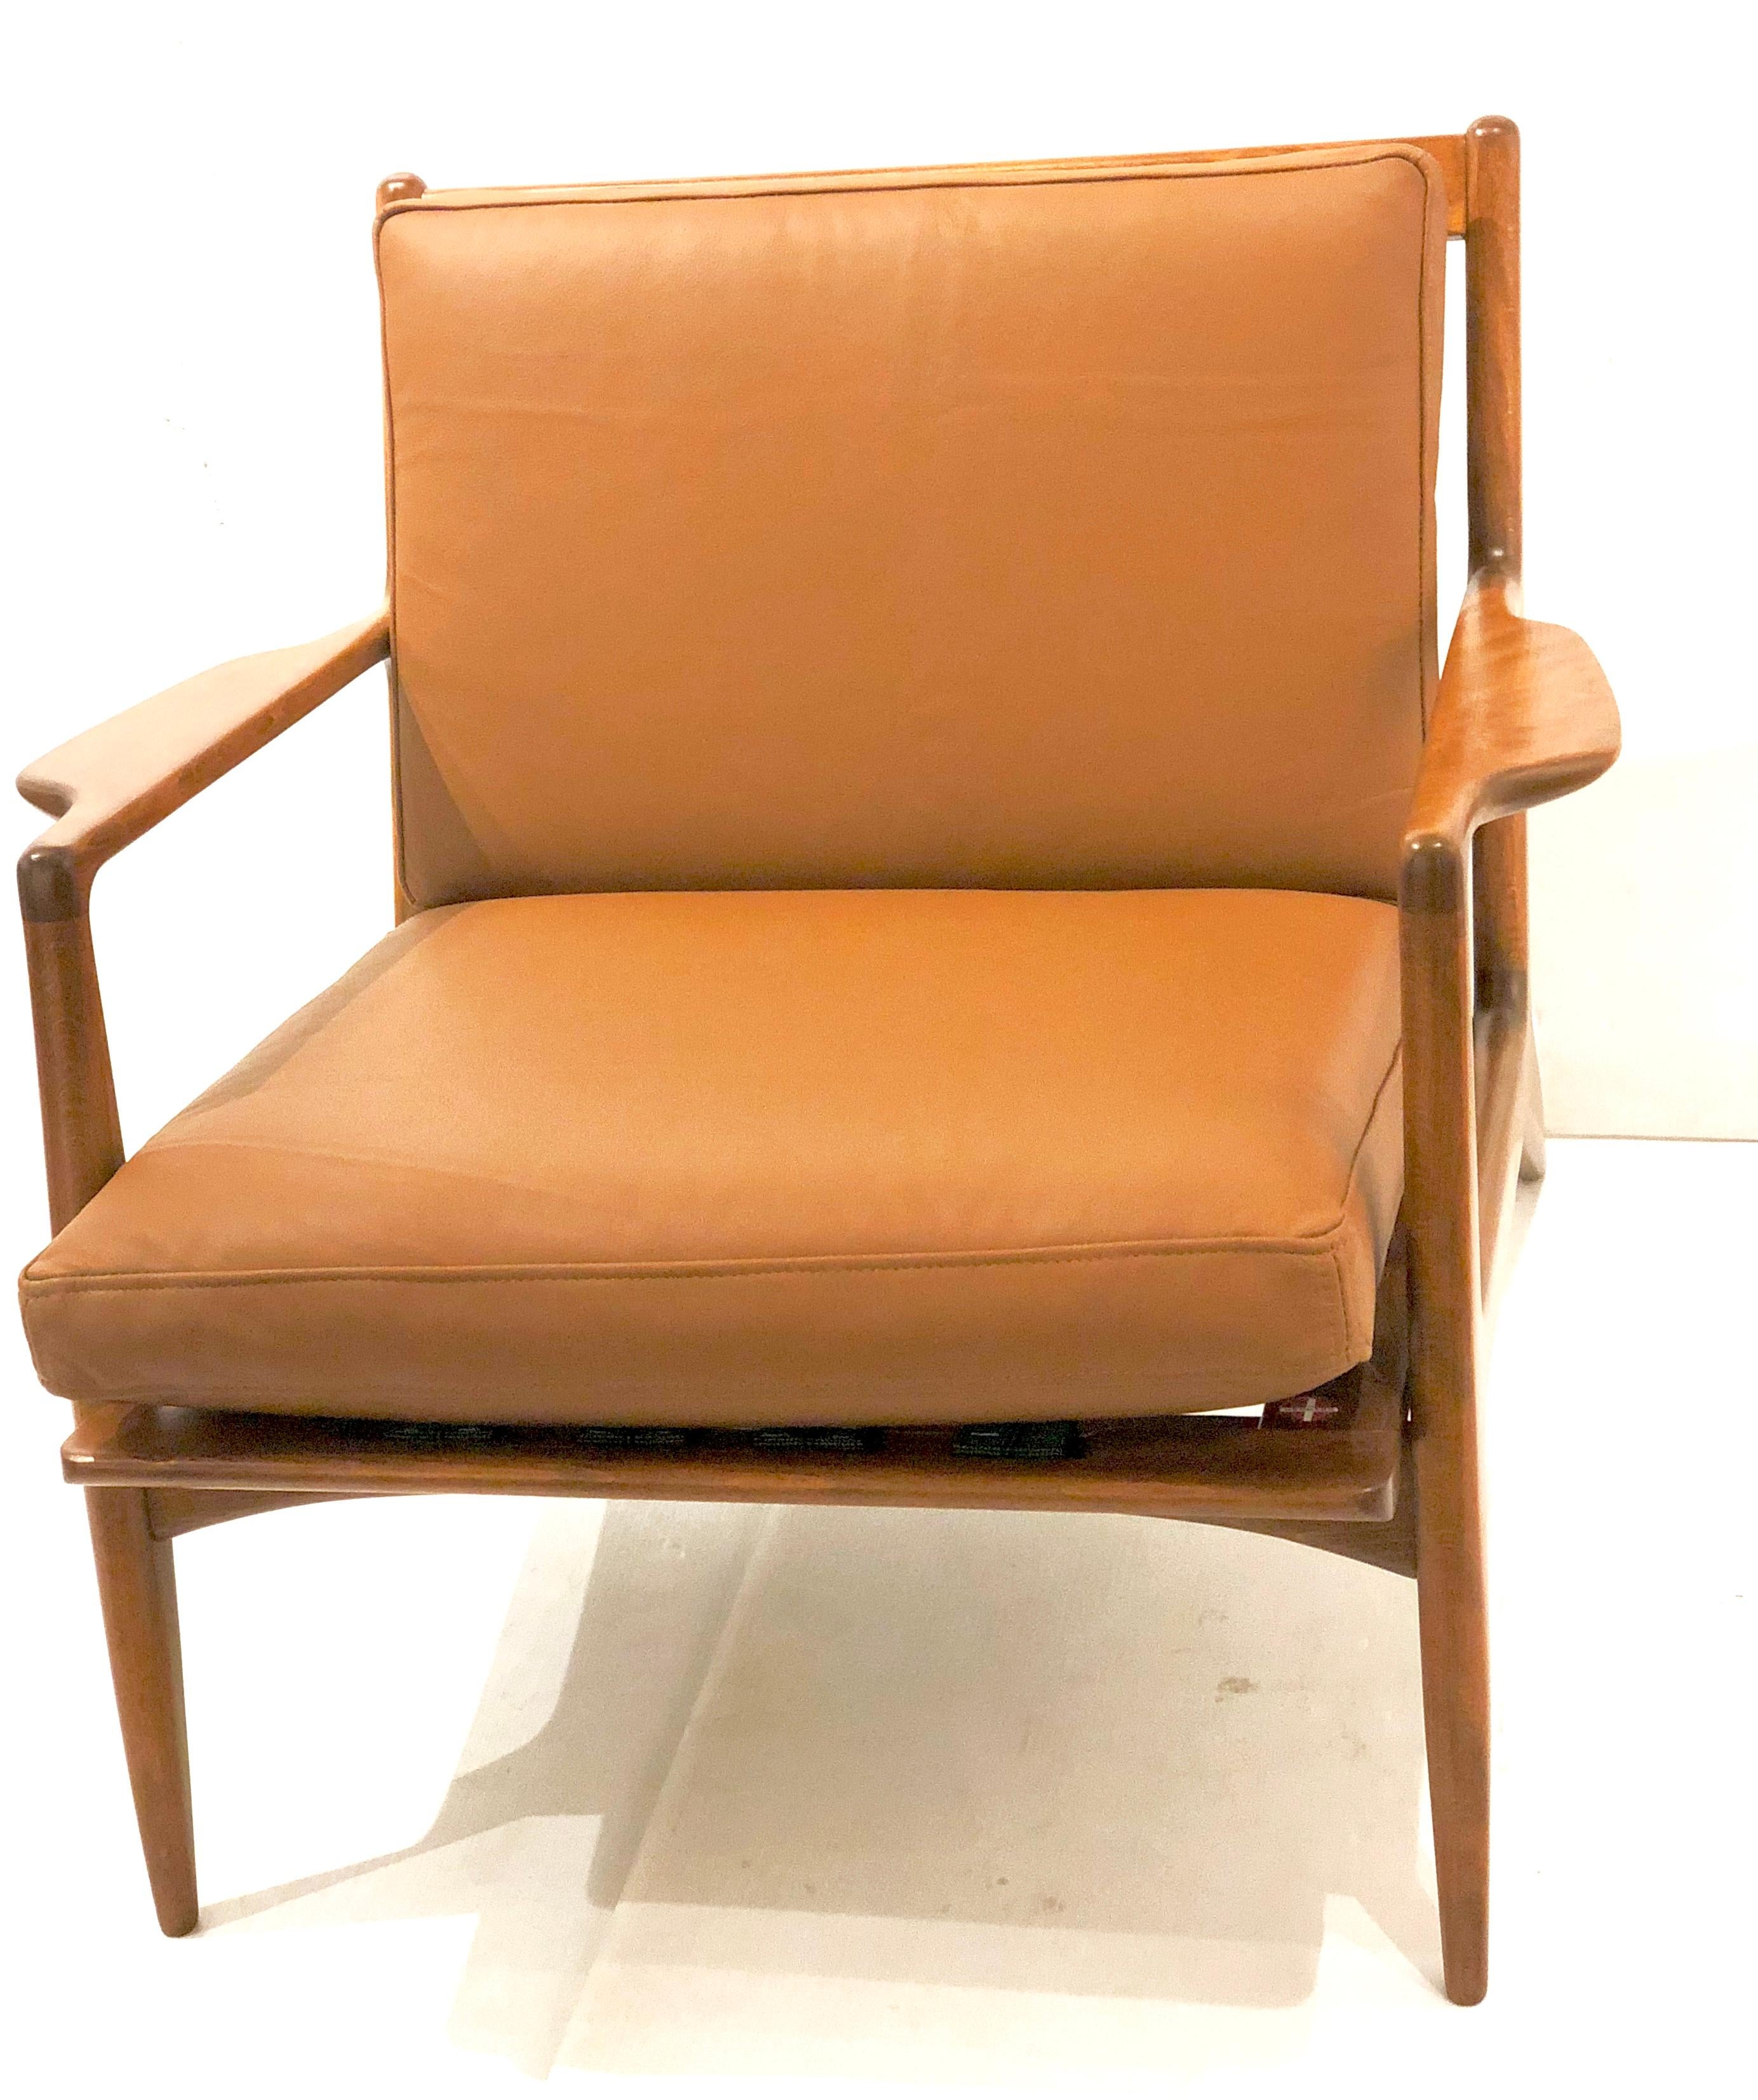 Scandinavian Modern Pair of Danish Modern Lounge Chairs by Ib Kofod-Larsen in Leather